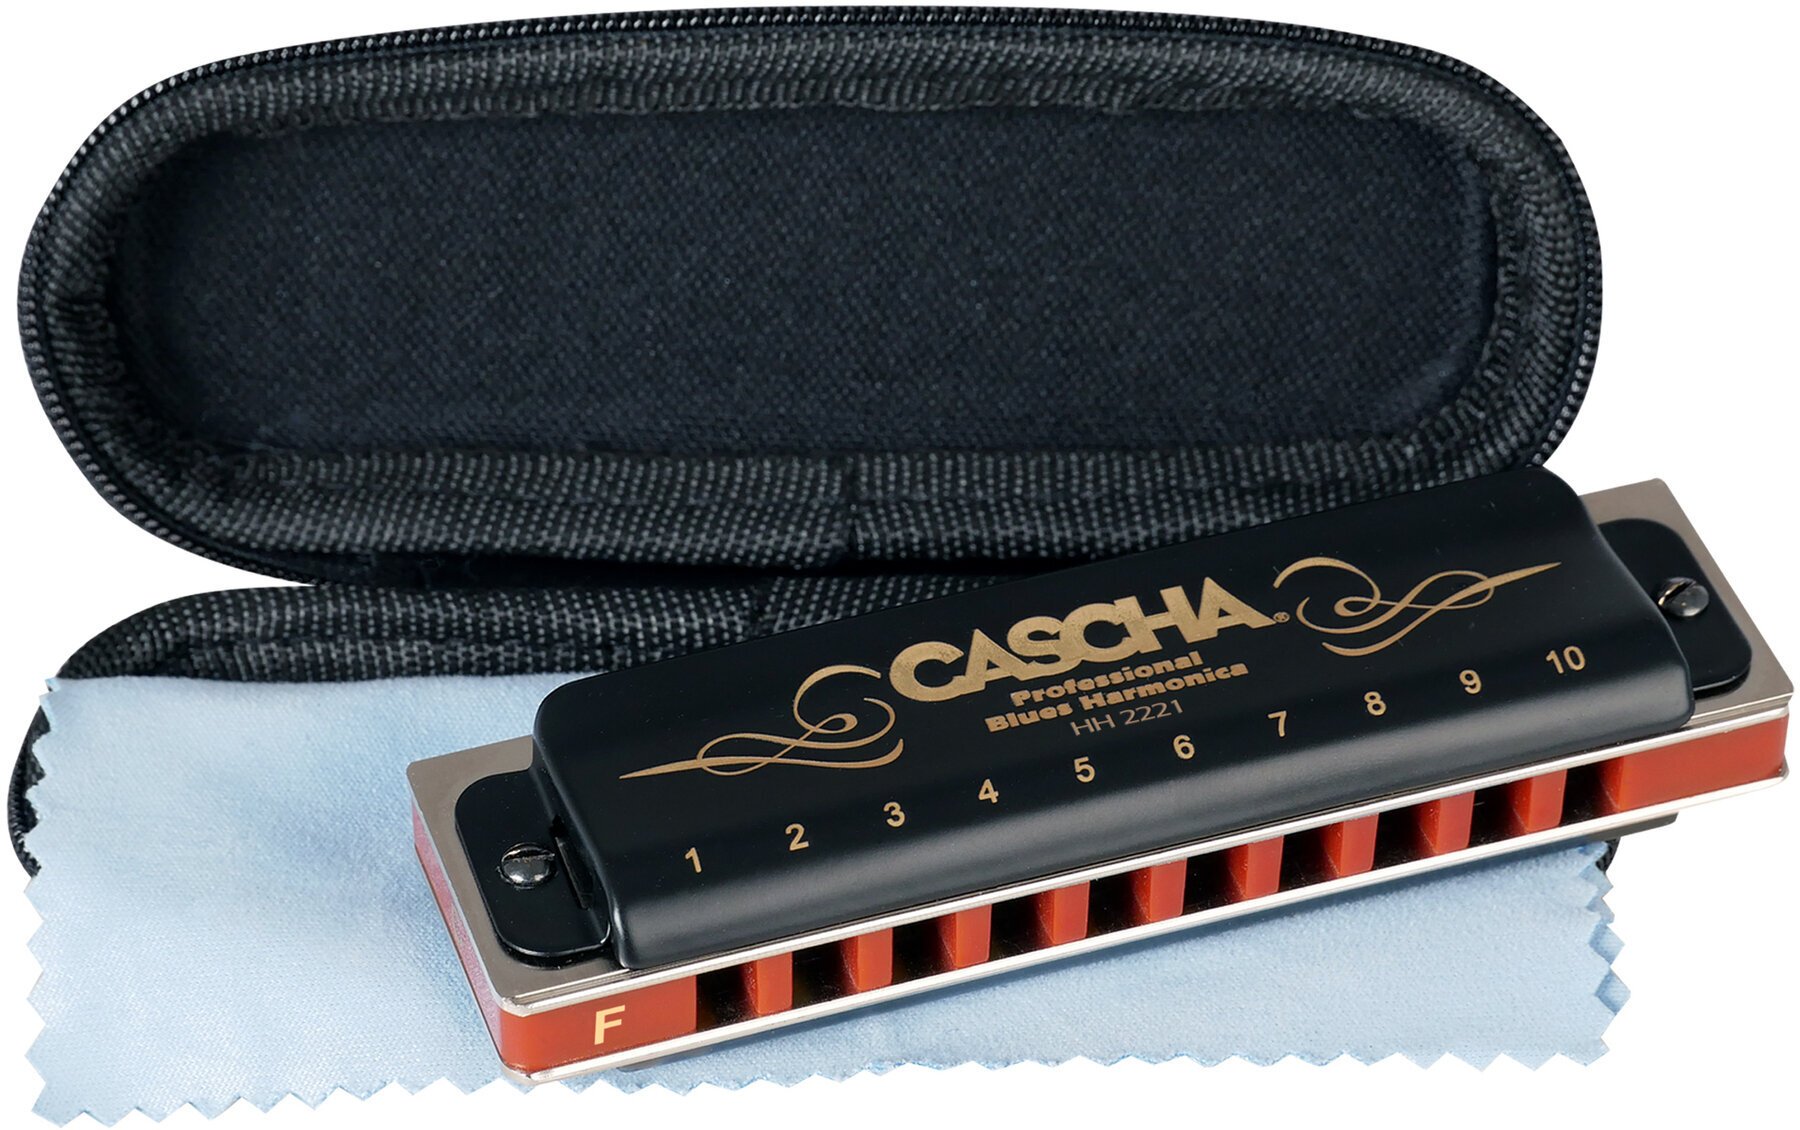 Diatonic harmonica Cascha HH 2221 Professional Blues F